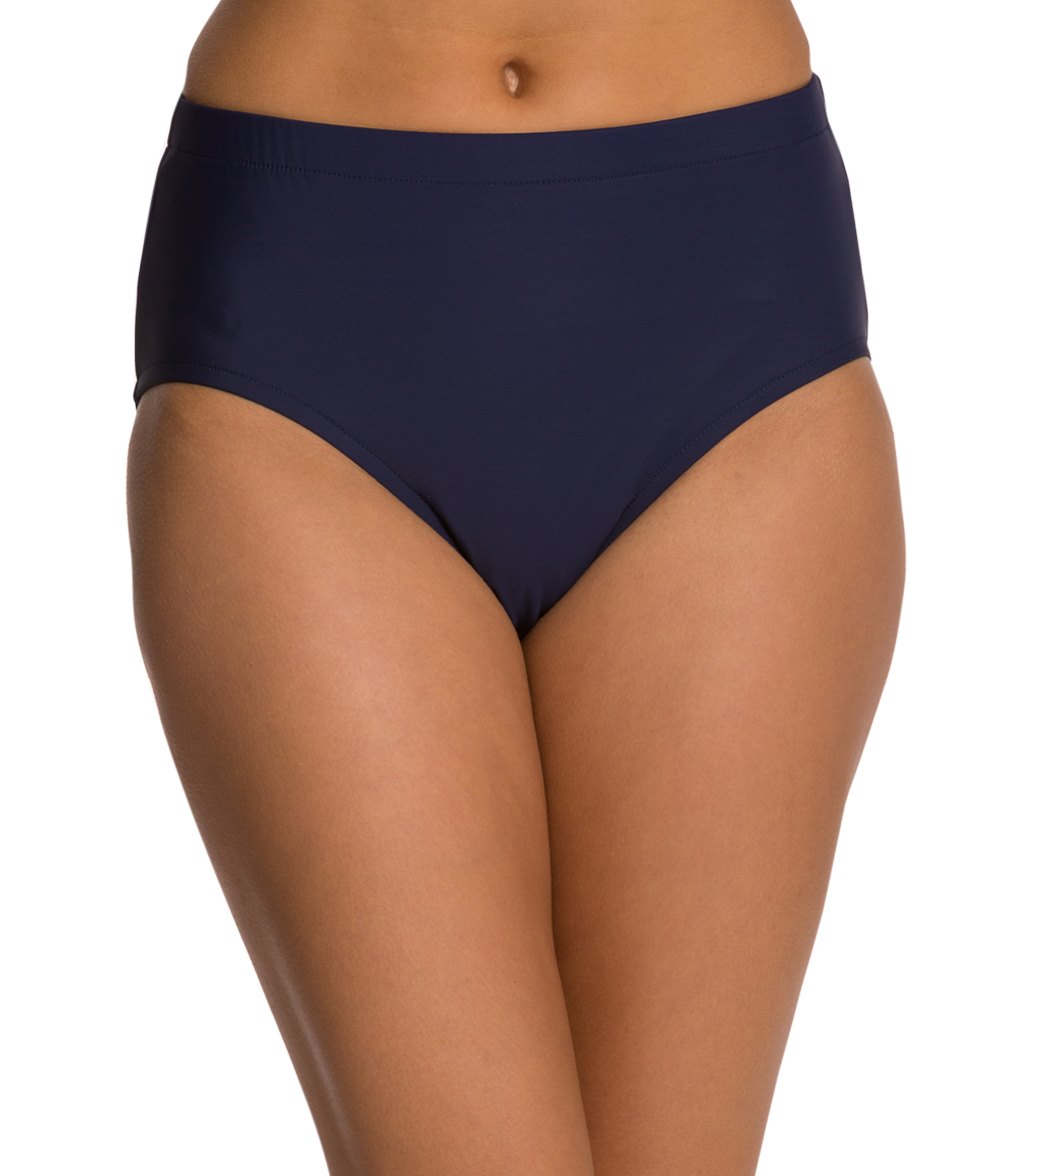 Penbrooke Swimwear Solid Basic Pants Bikini Bottom - New Navy Blue 8 Nylon/Spandex - Swimoutlet.com